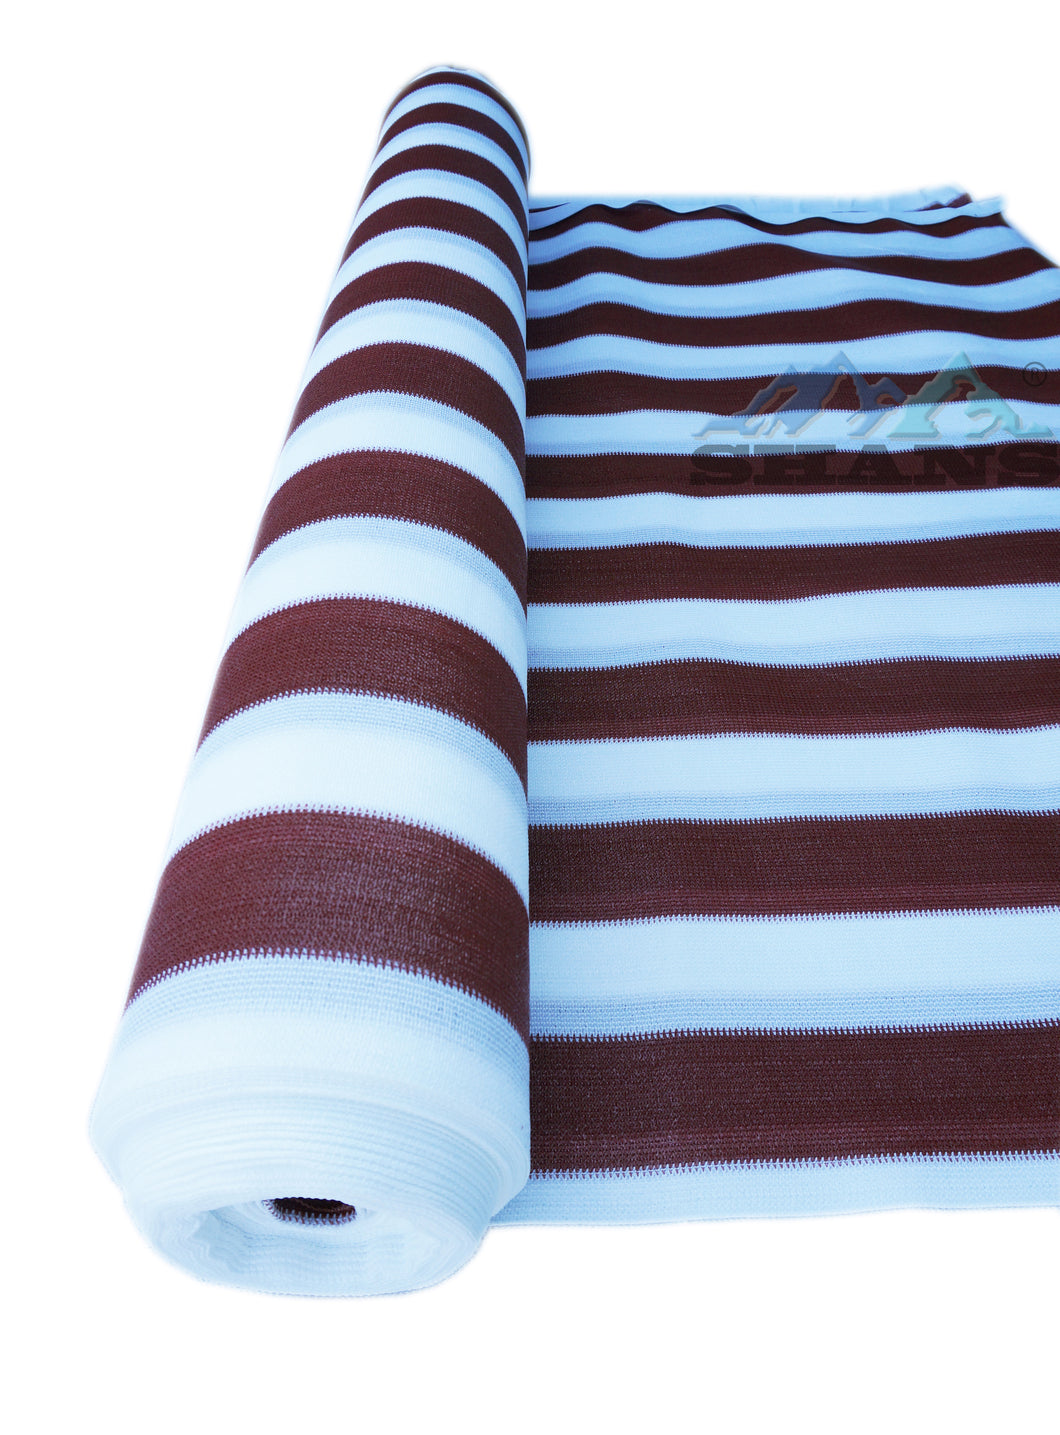 SHANS 遮阳帆面料户外遮阳罩栗色和白色条纹带自由夹塑料索环塑料索环